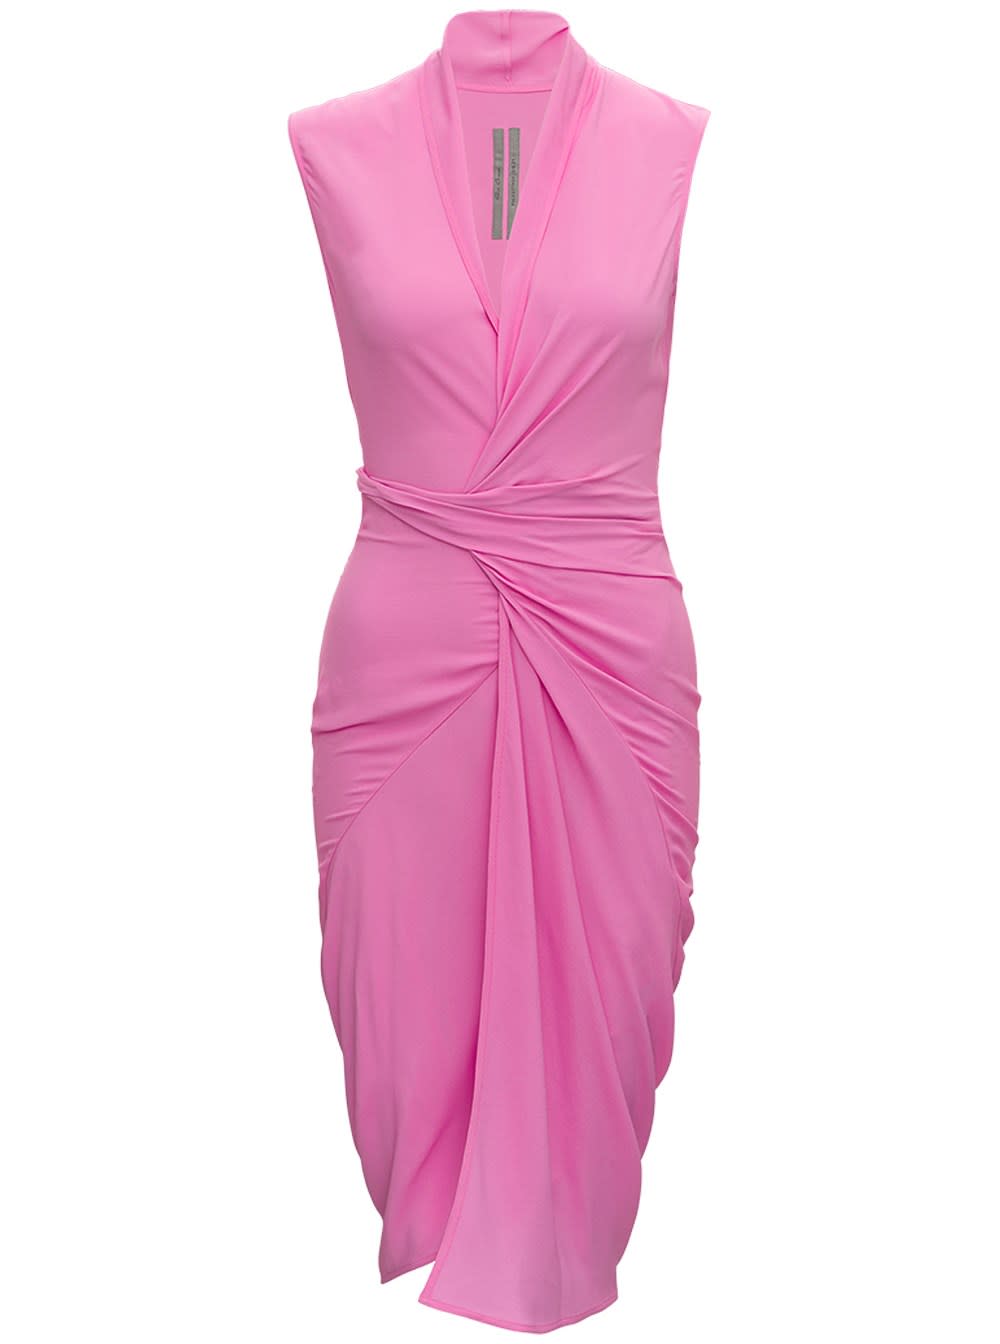 Rick Owens Pink Tunic Dress In Silk Blend